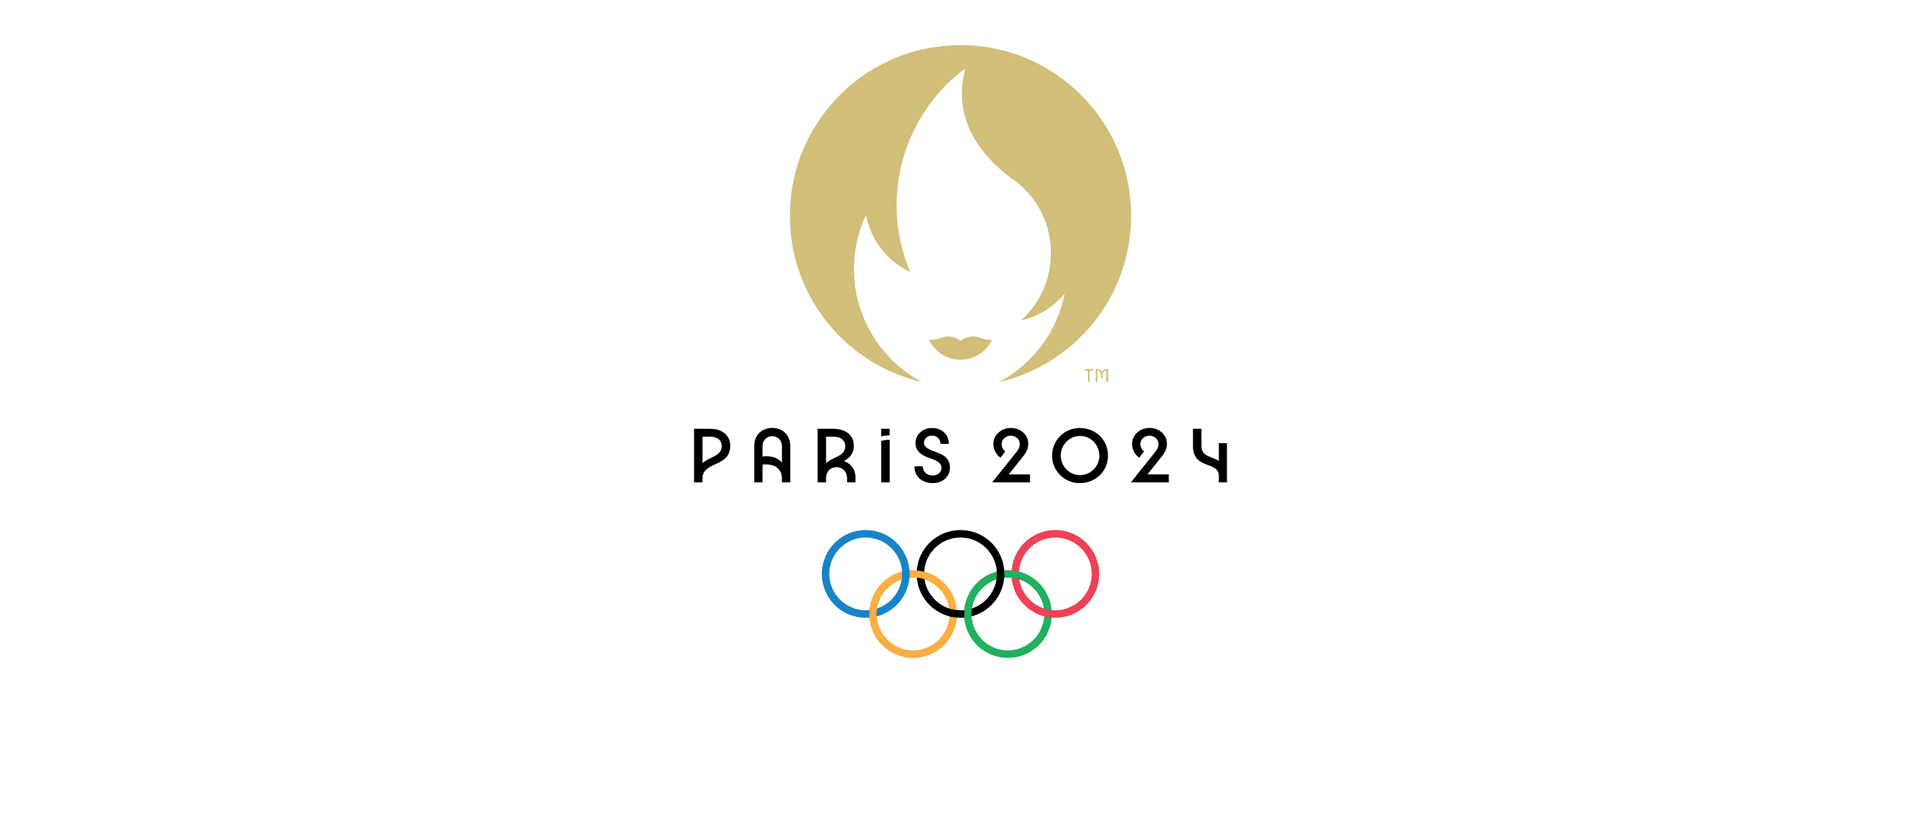 Паралимпиада 2024. Летние Олимпийские игры 2024. Олимпийских игр–2024 в Париже лого. Логотип олимпиады.